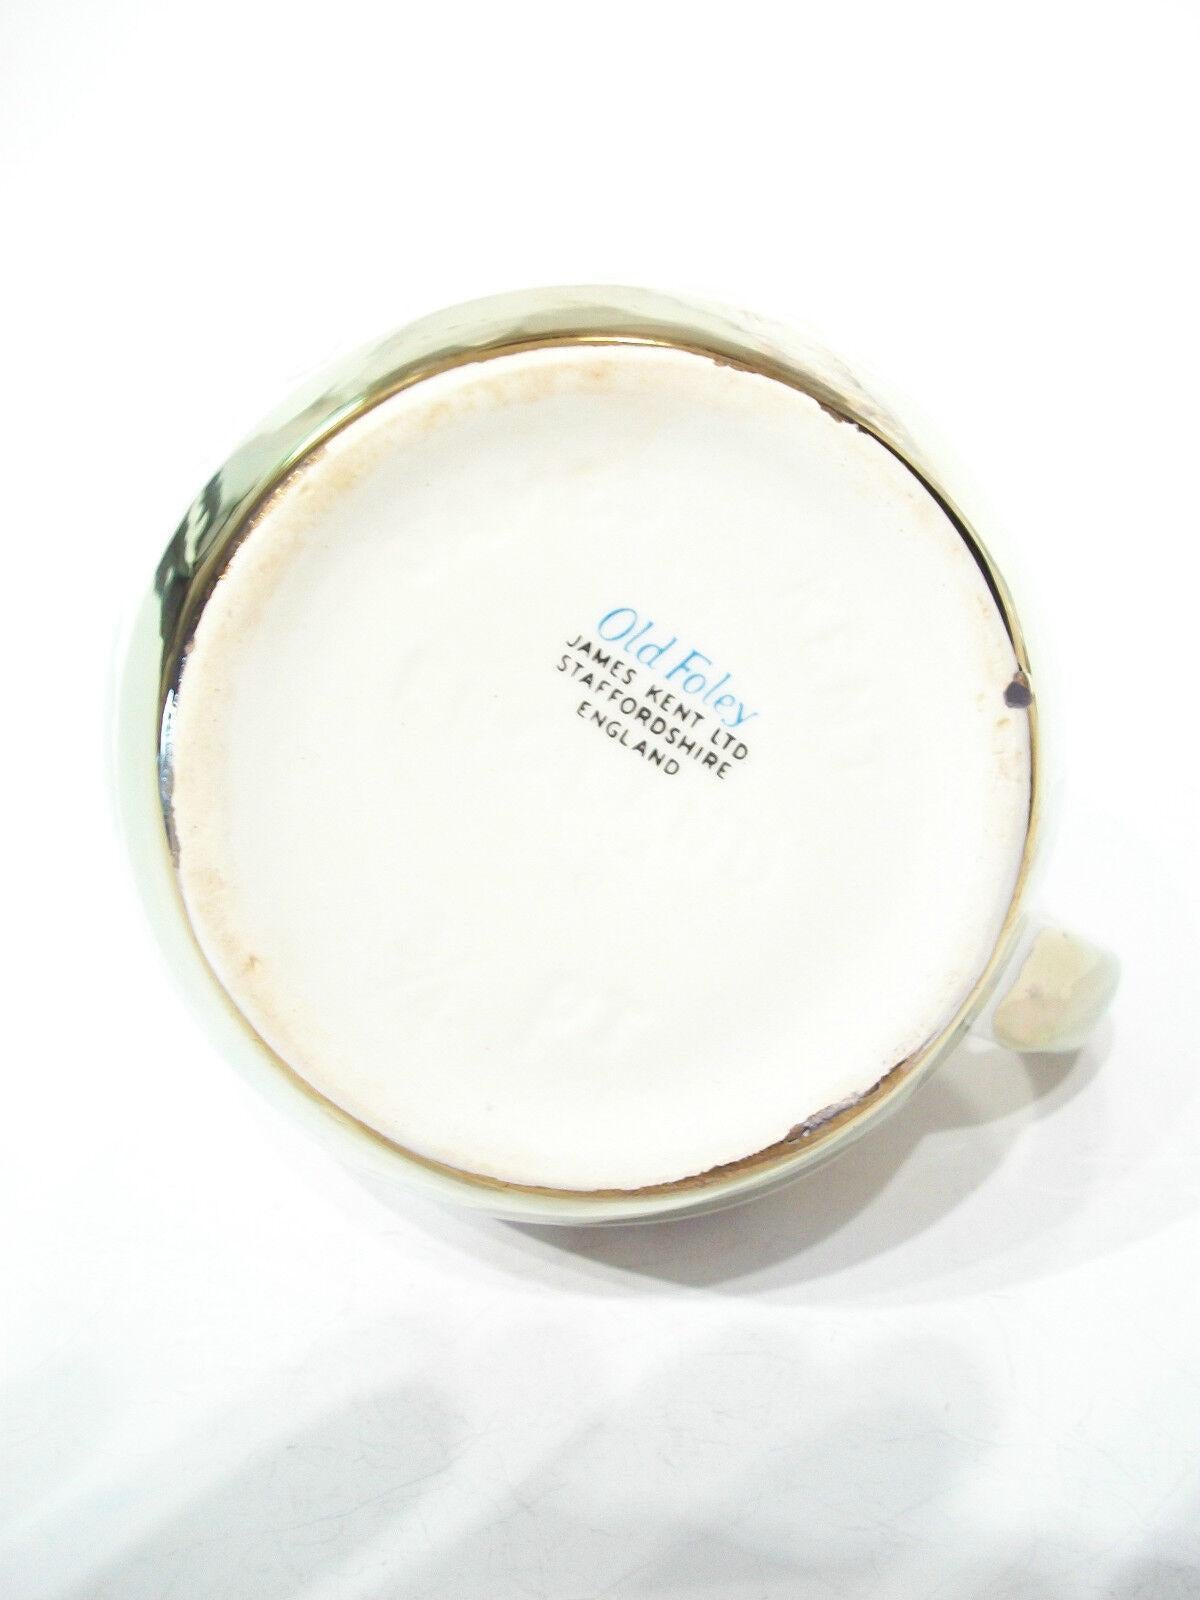 Ceramic JAMES KENT LTD - Antique Lusterware 3/4 Pint Jug - United Kingdom - 20th Century For Sale